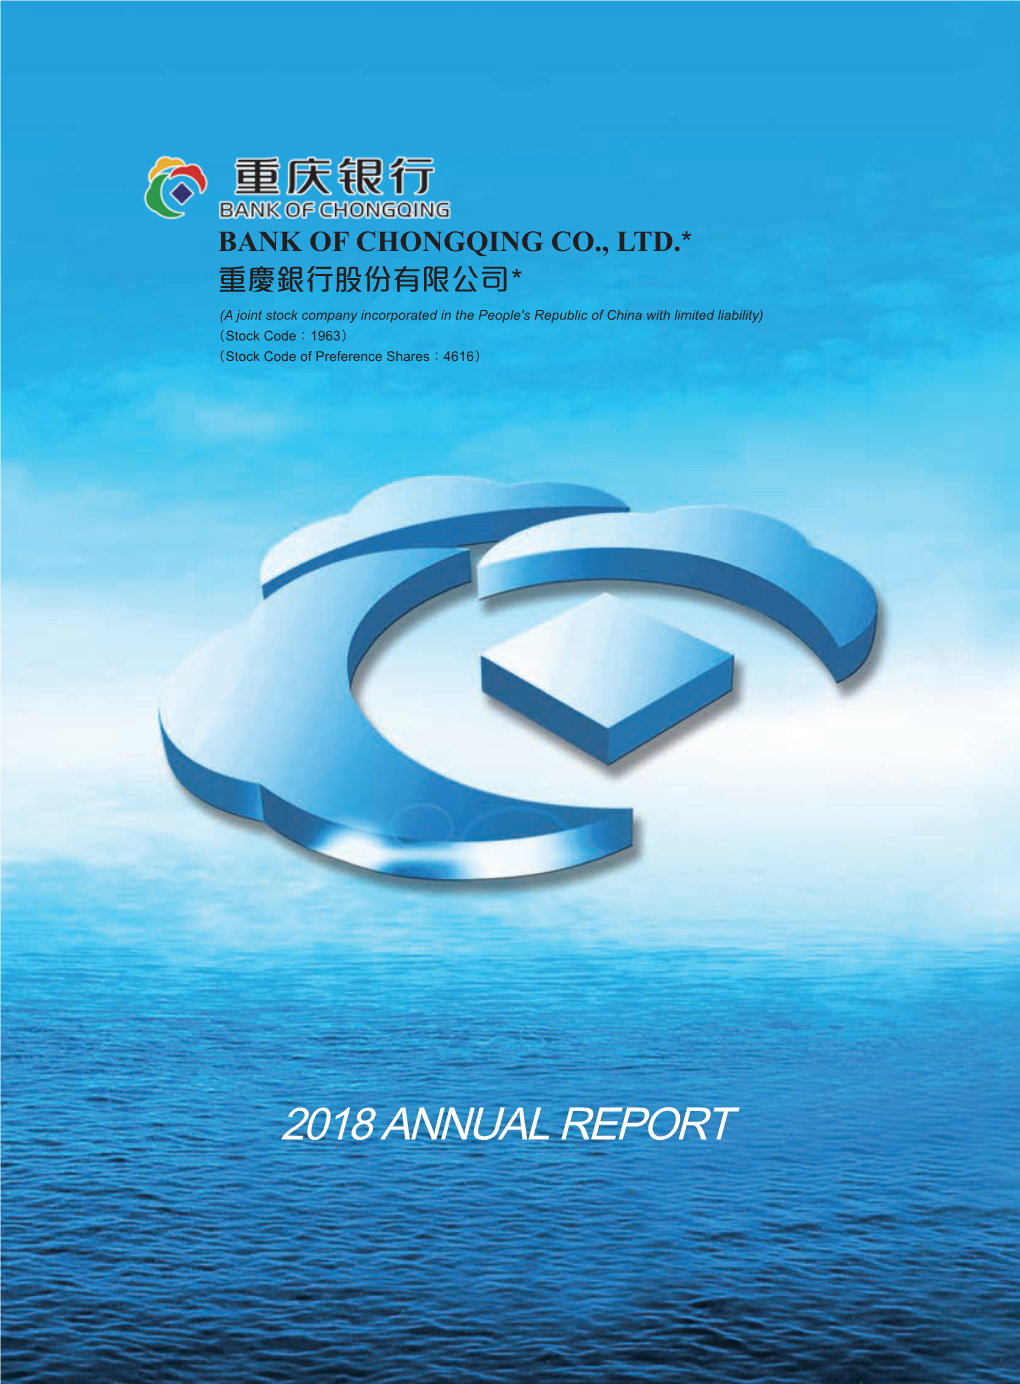 2018 ANNUAL REPORT * Bank of Chongqing Co., Ltd